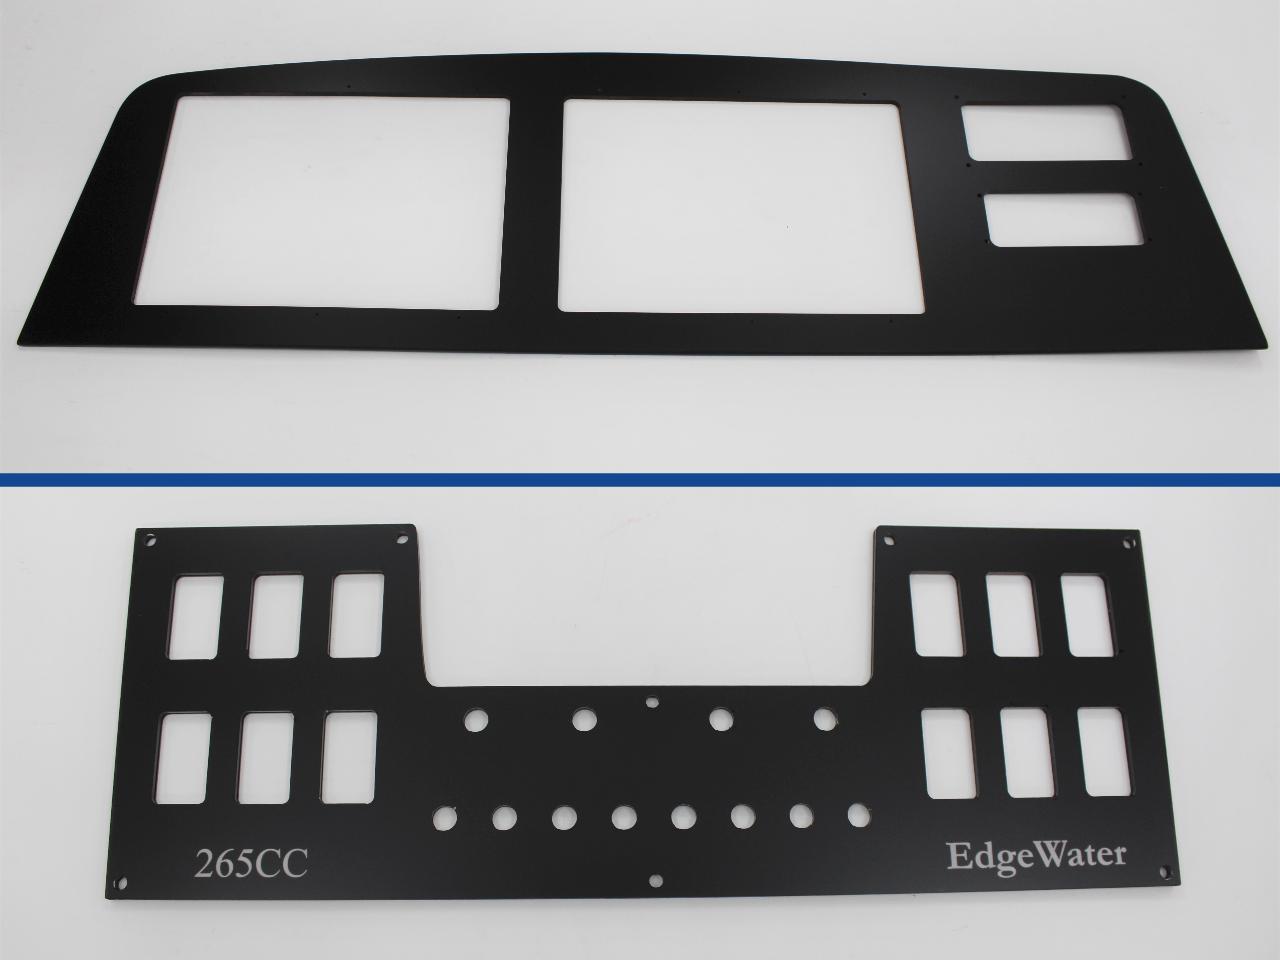 Edgewater 265CC Switch Panel and Electronics Panel